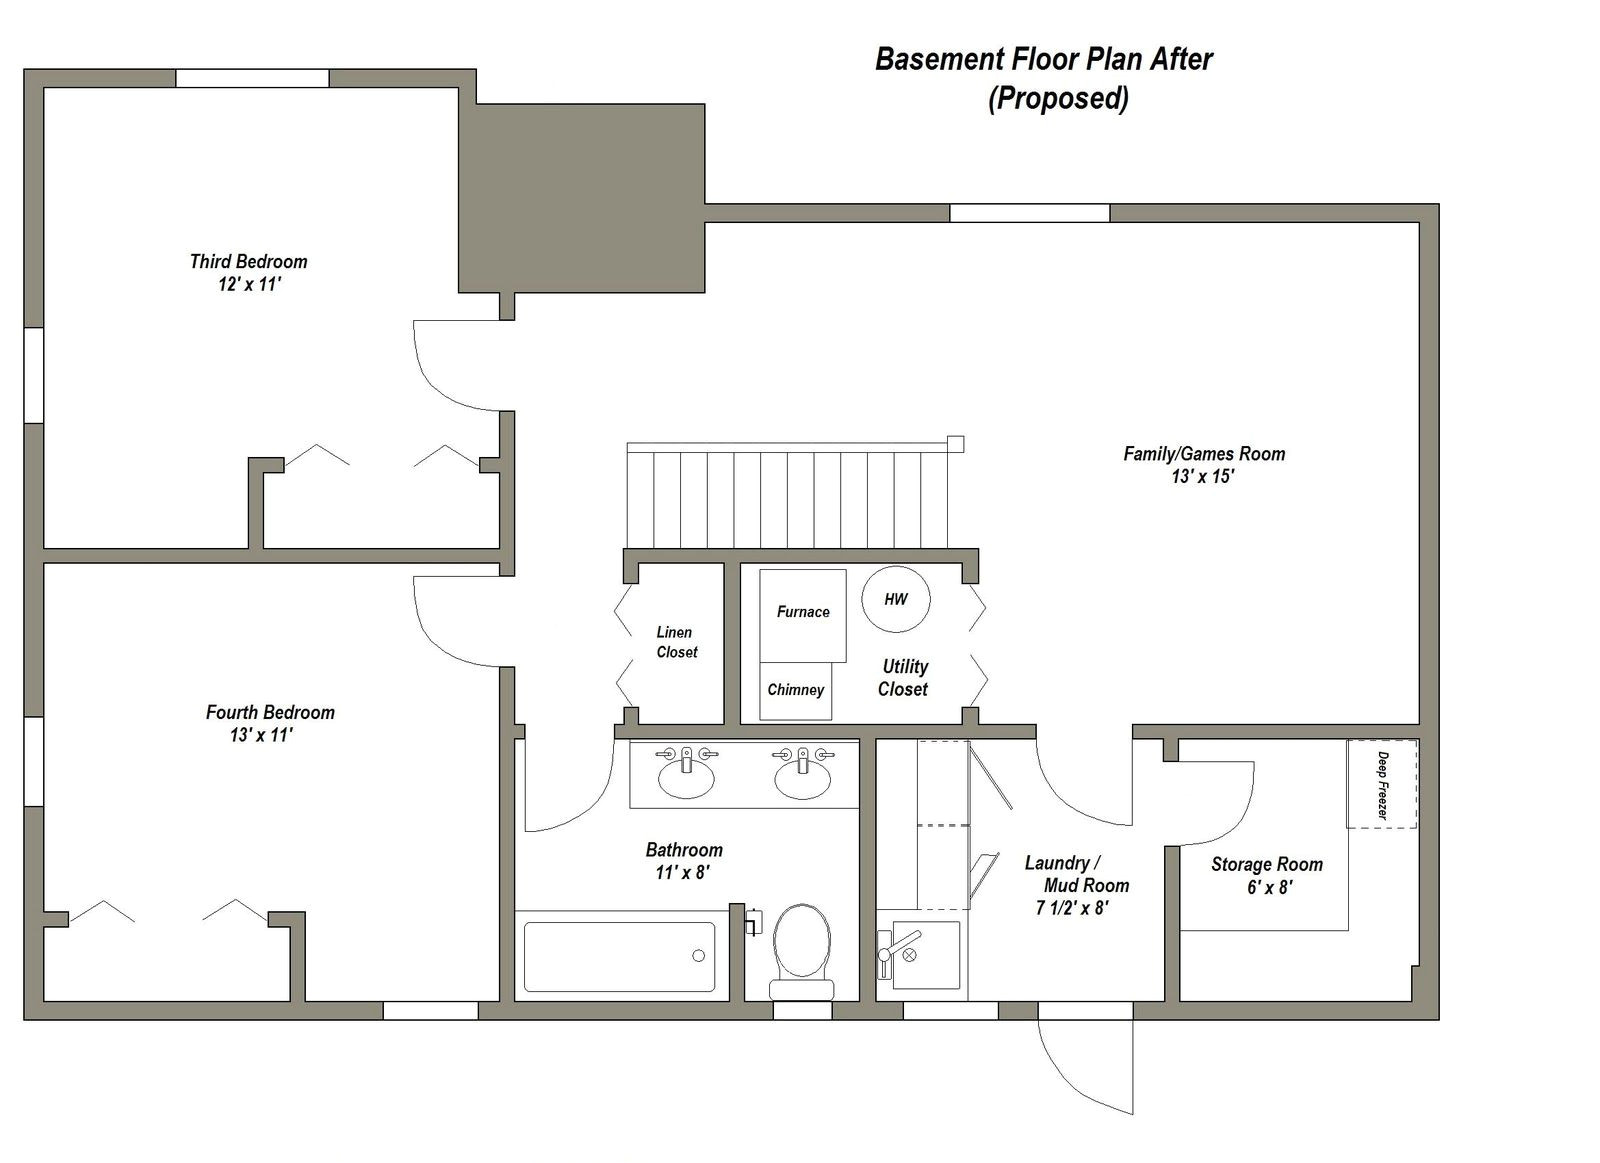 One Level House Plans with No Basement Pin by Krystle Rupert On Basement Pinterest Basement